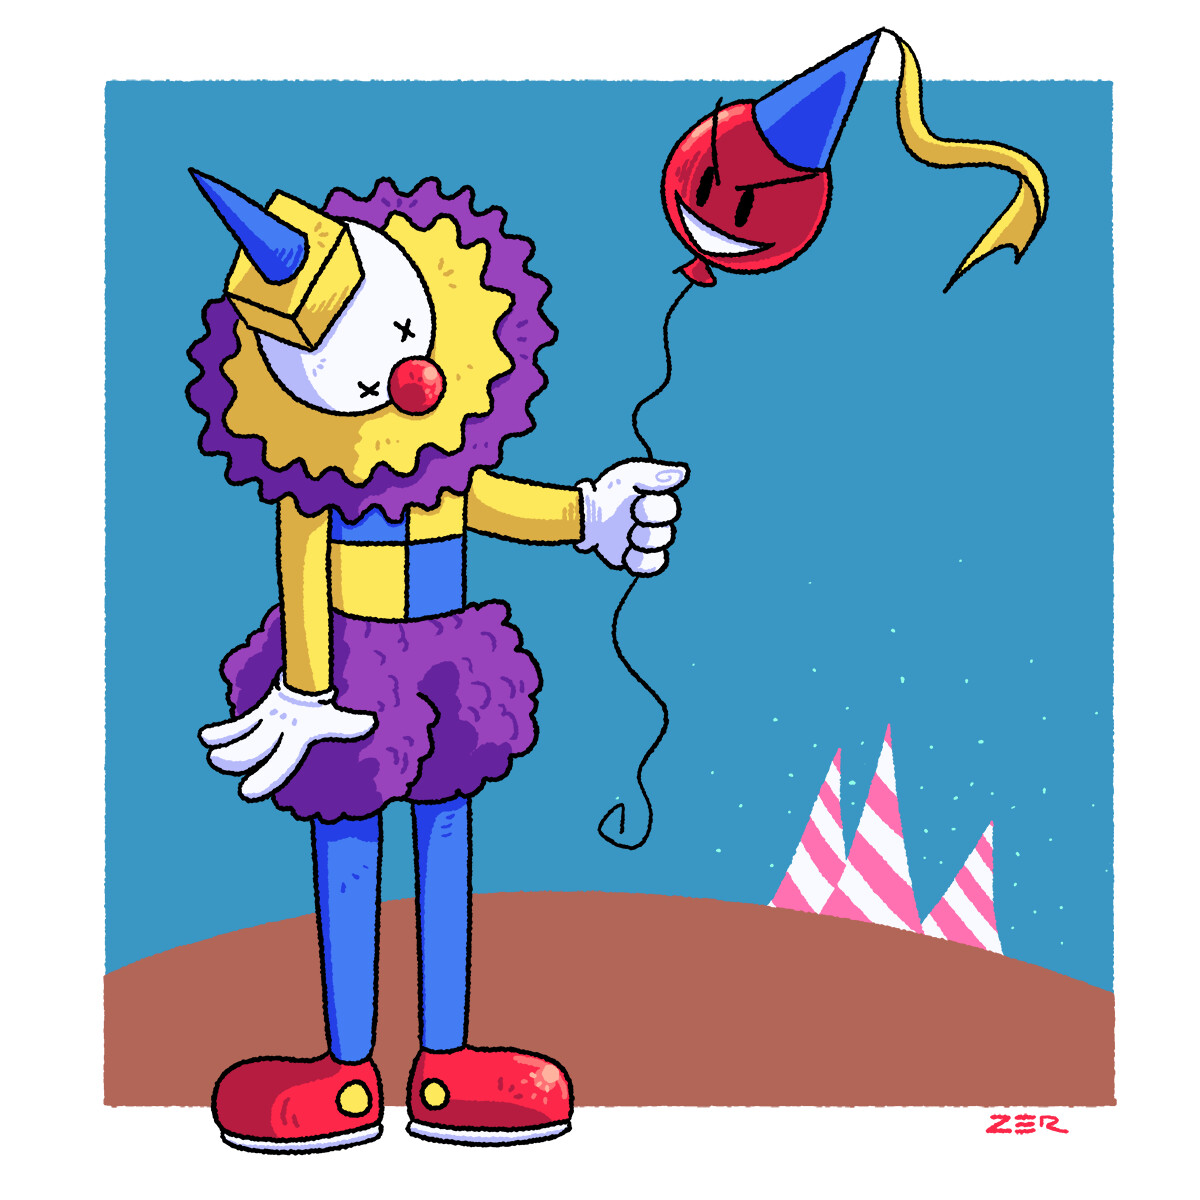 ArtStation - Sad clown